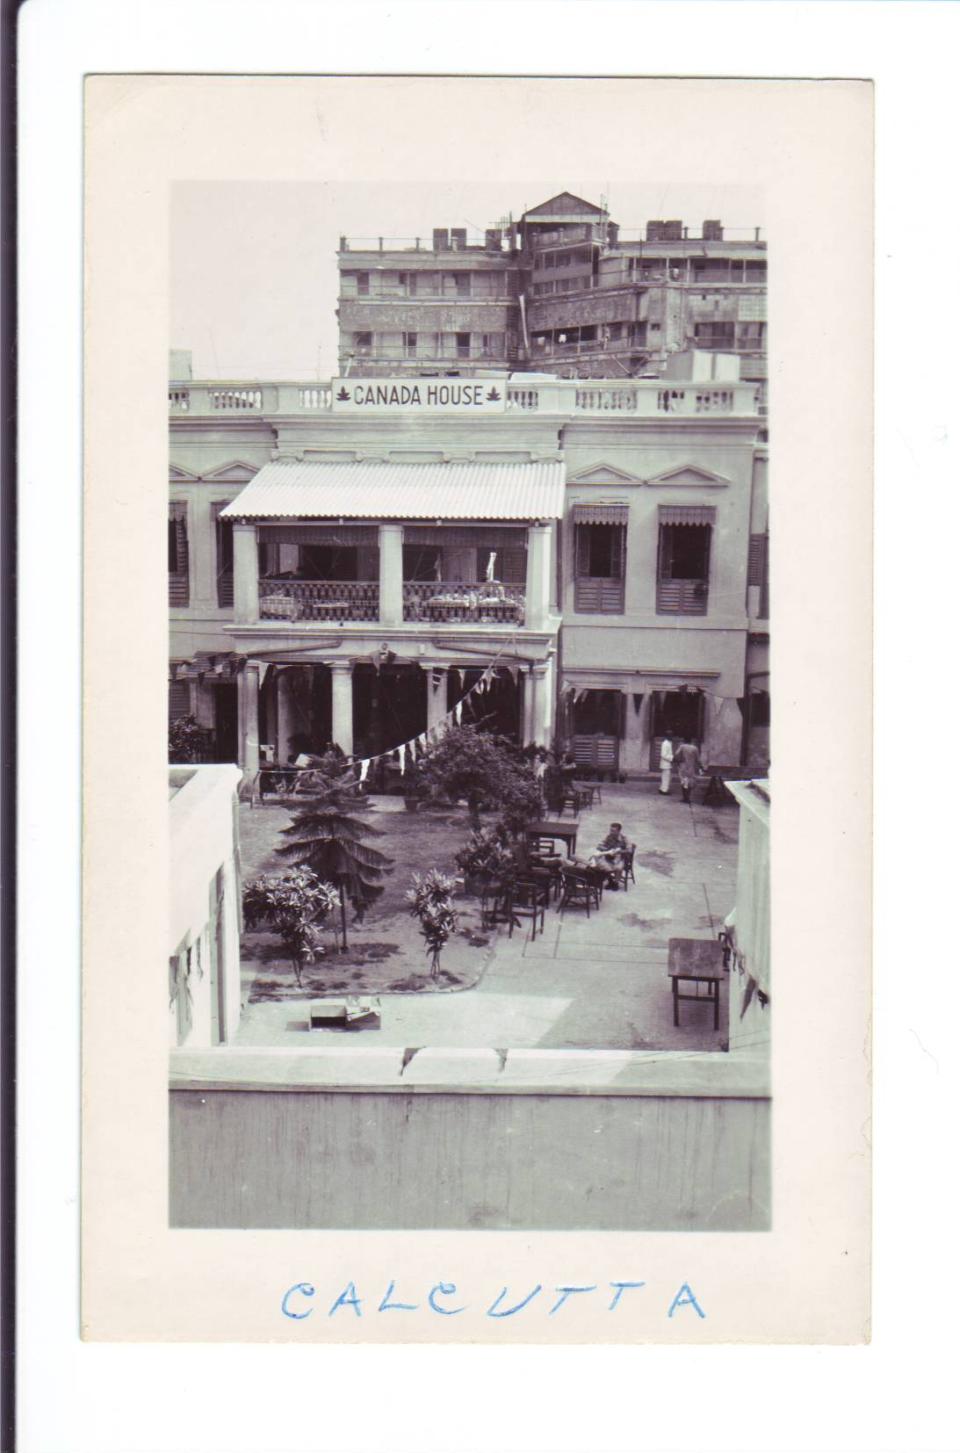 Photo #78
Canada House in
Calcutta, India